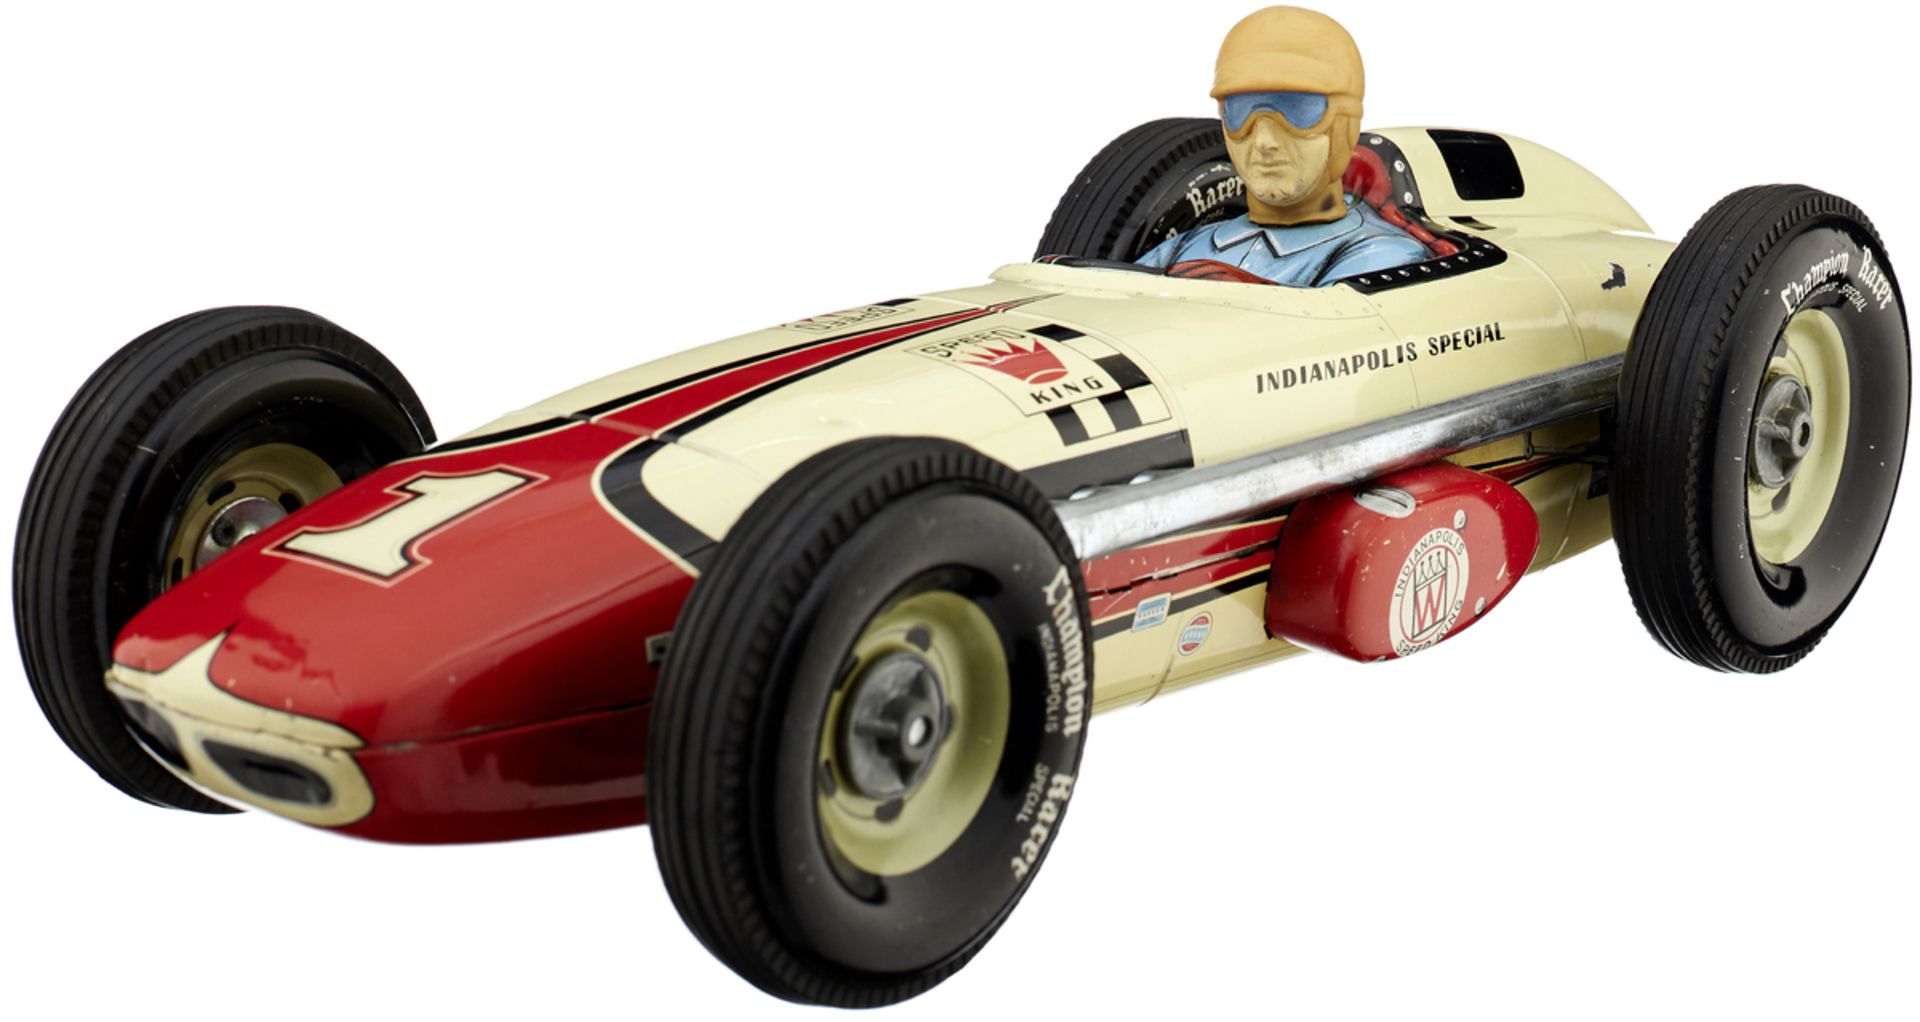 Vintage Indianapolis Speed RacerYonezawa Japan, um 1960. Blechrennauto. Originale Fahrerfigur.